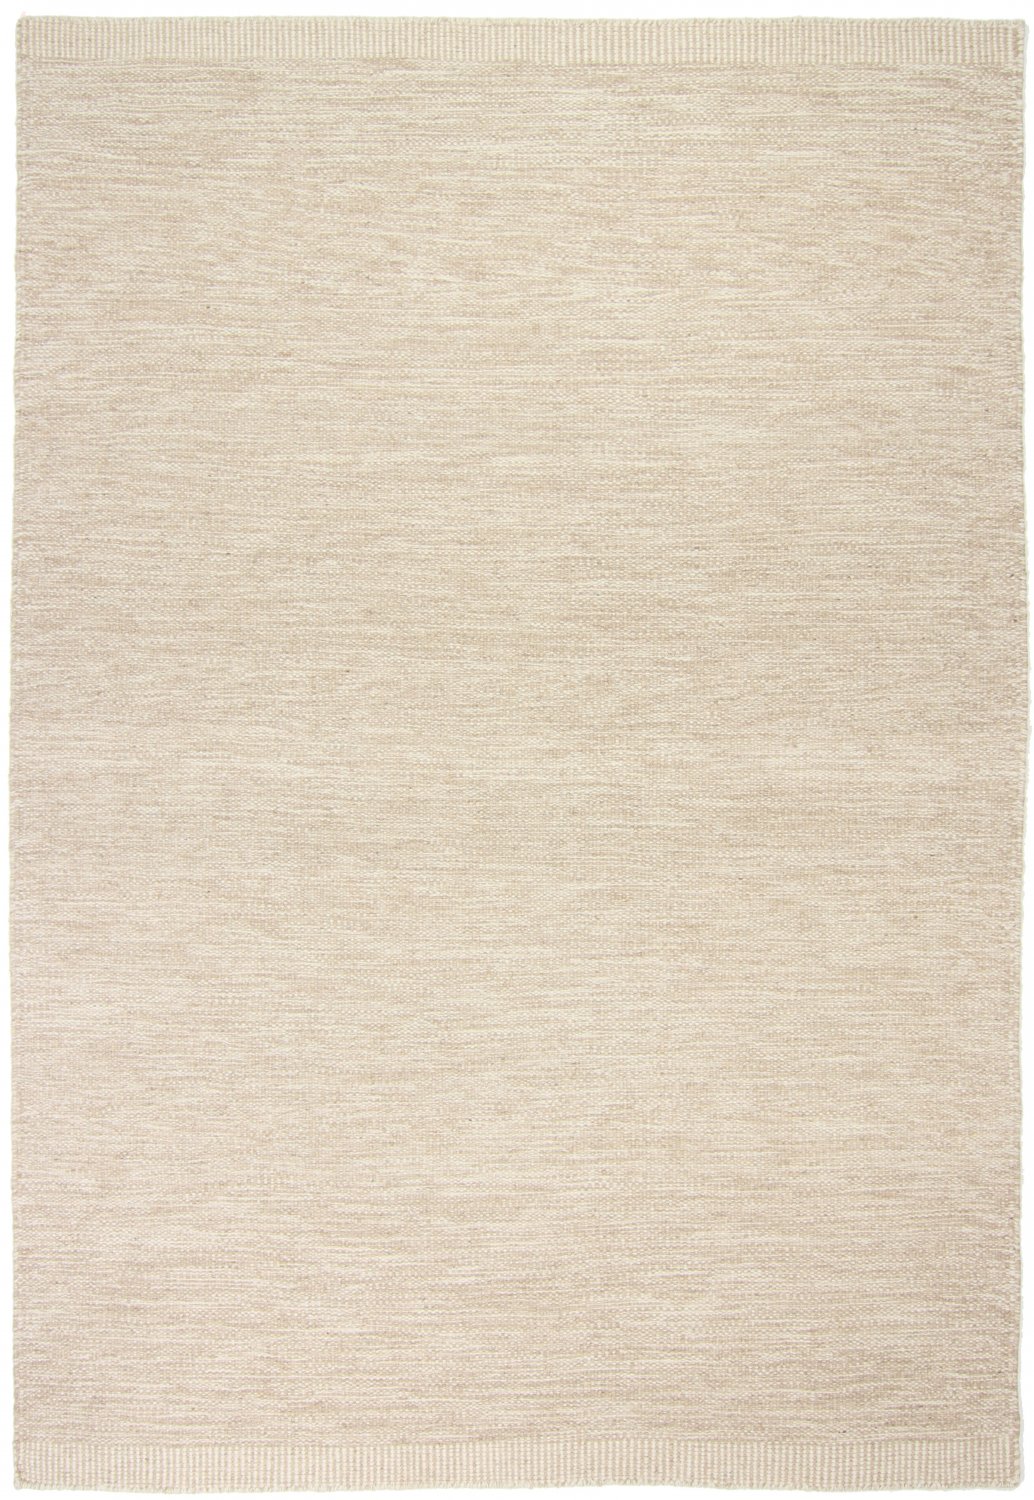 Wollen-vloerkleed - Willmar (beige)